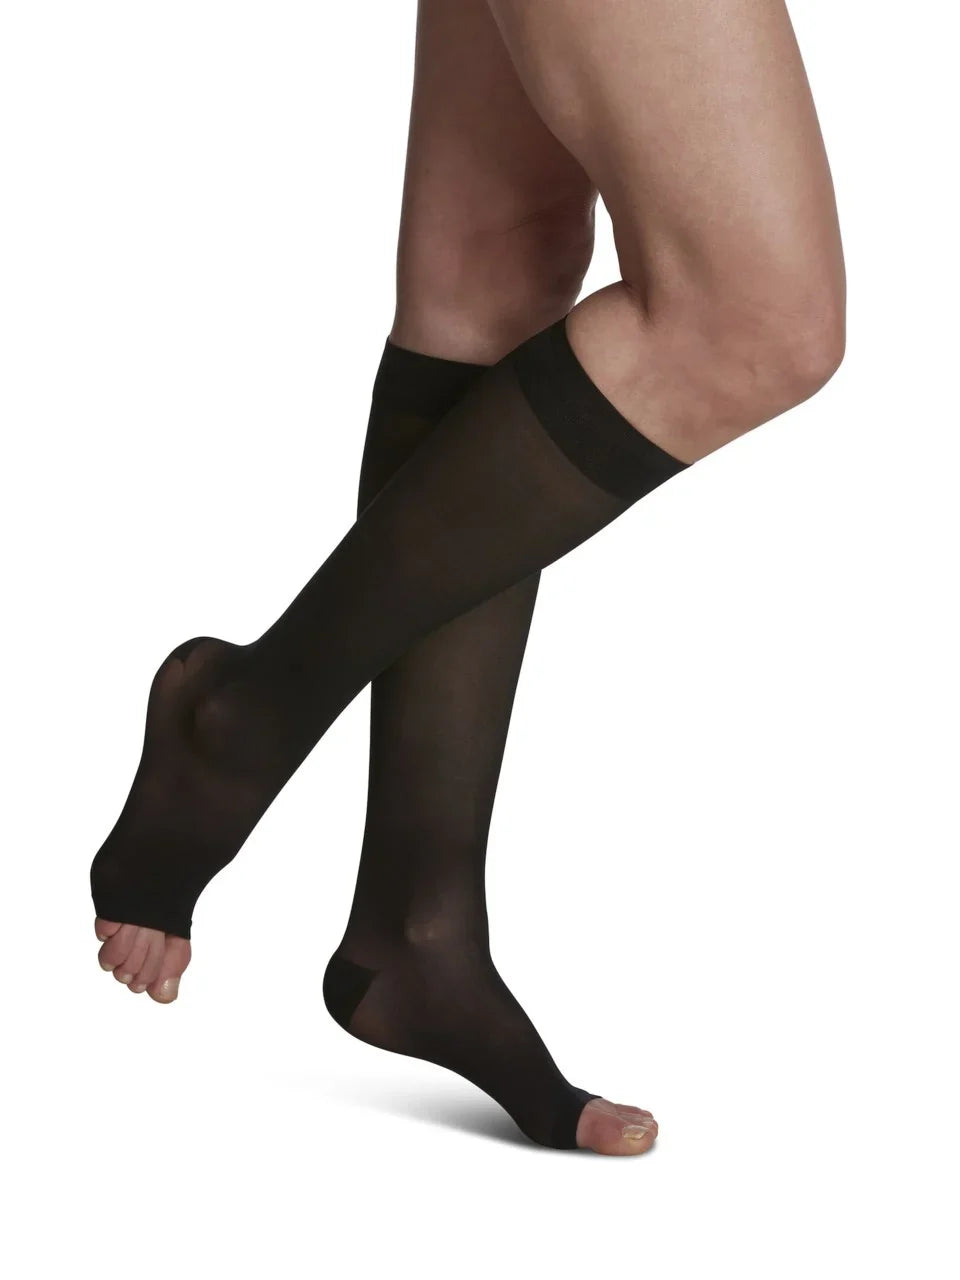 Sigvaris 780 Sheer Compression Socks 30-40 mmHg Calf High for Women Open Toe